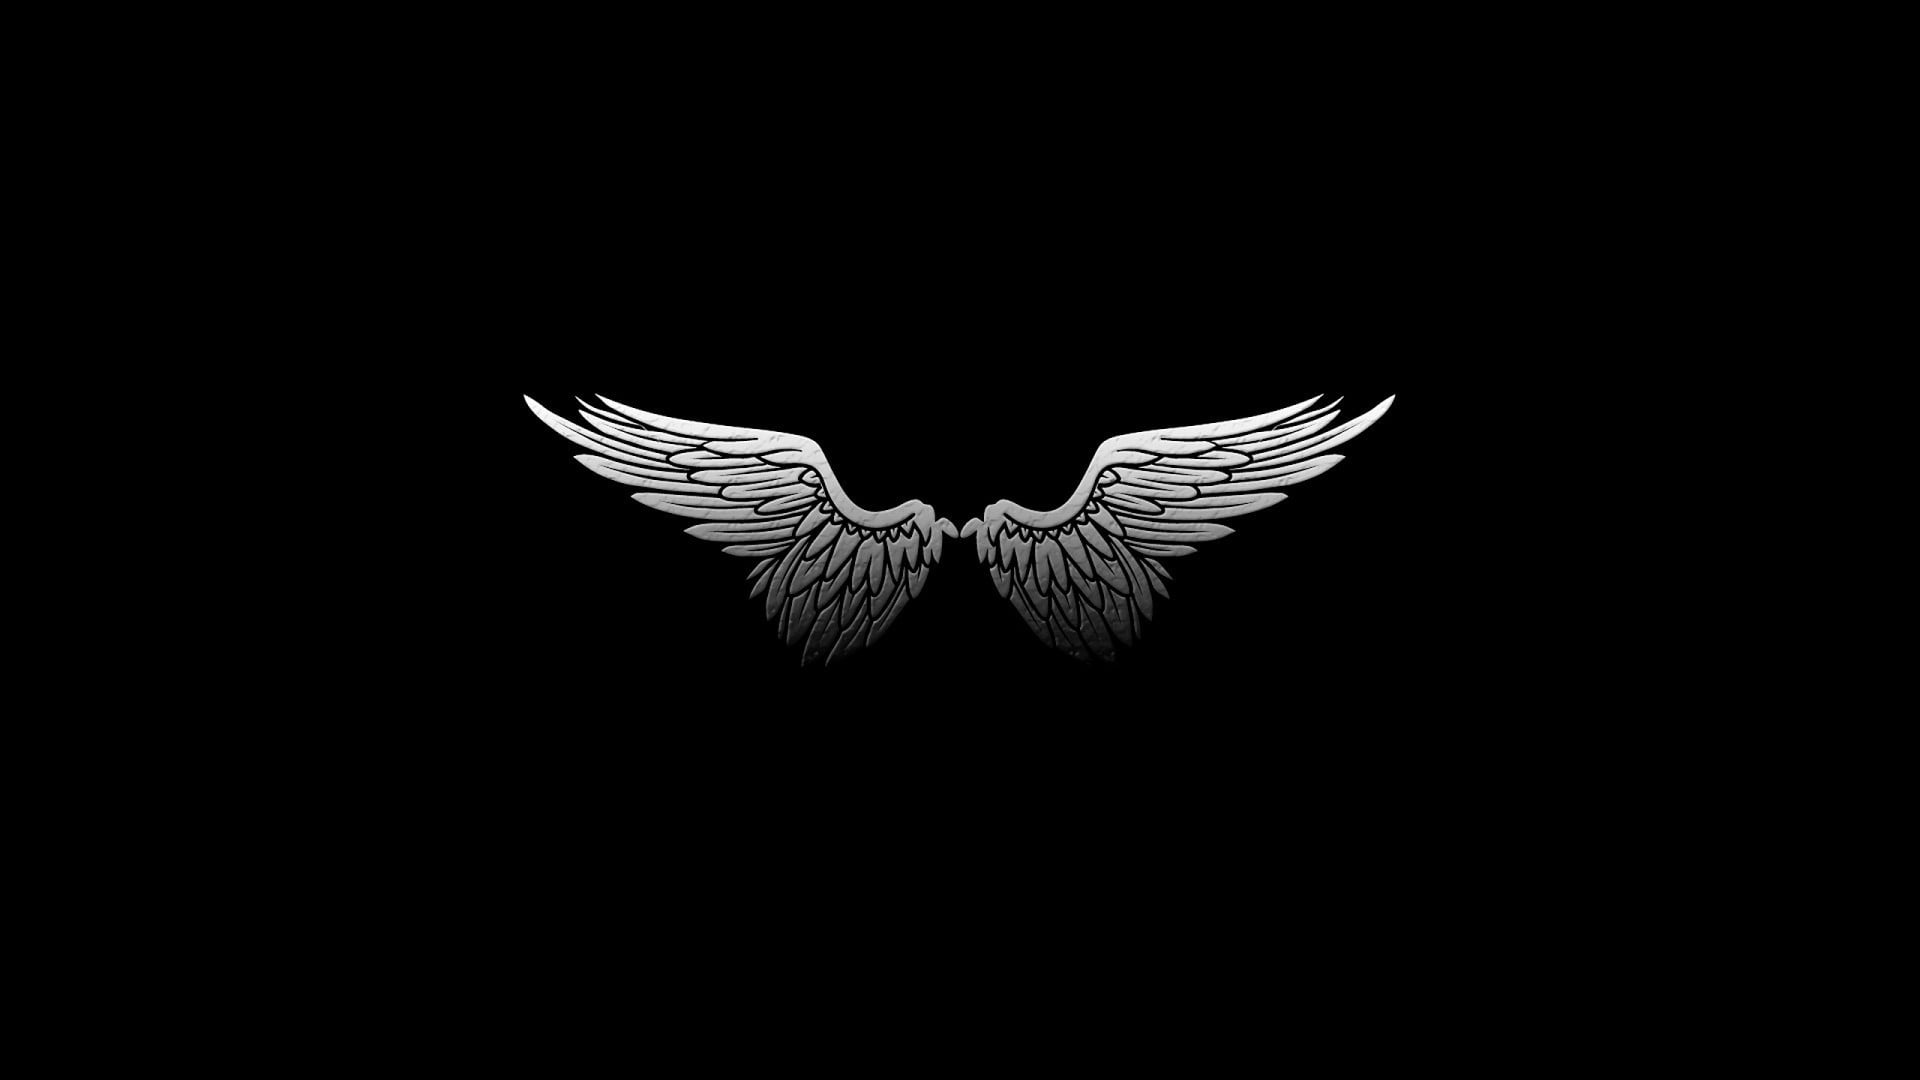 silver wings, black background, digital art, minimalism, feathers